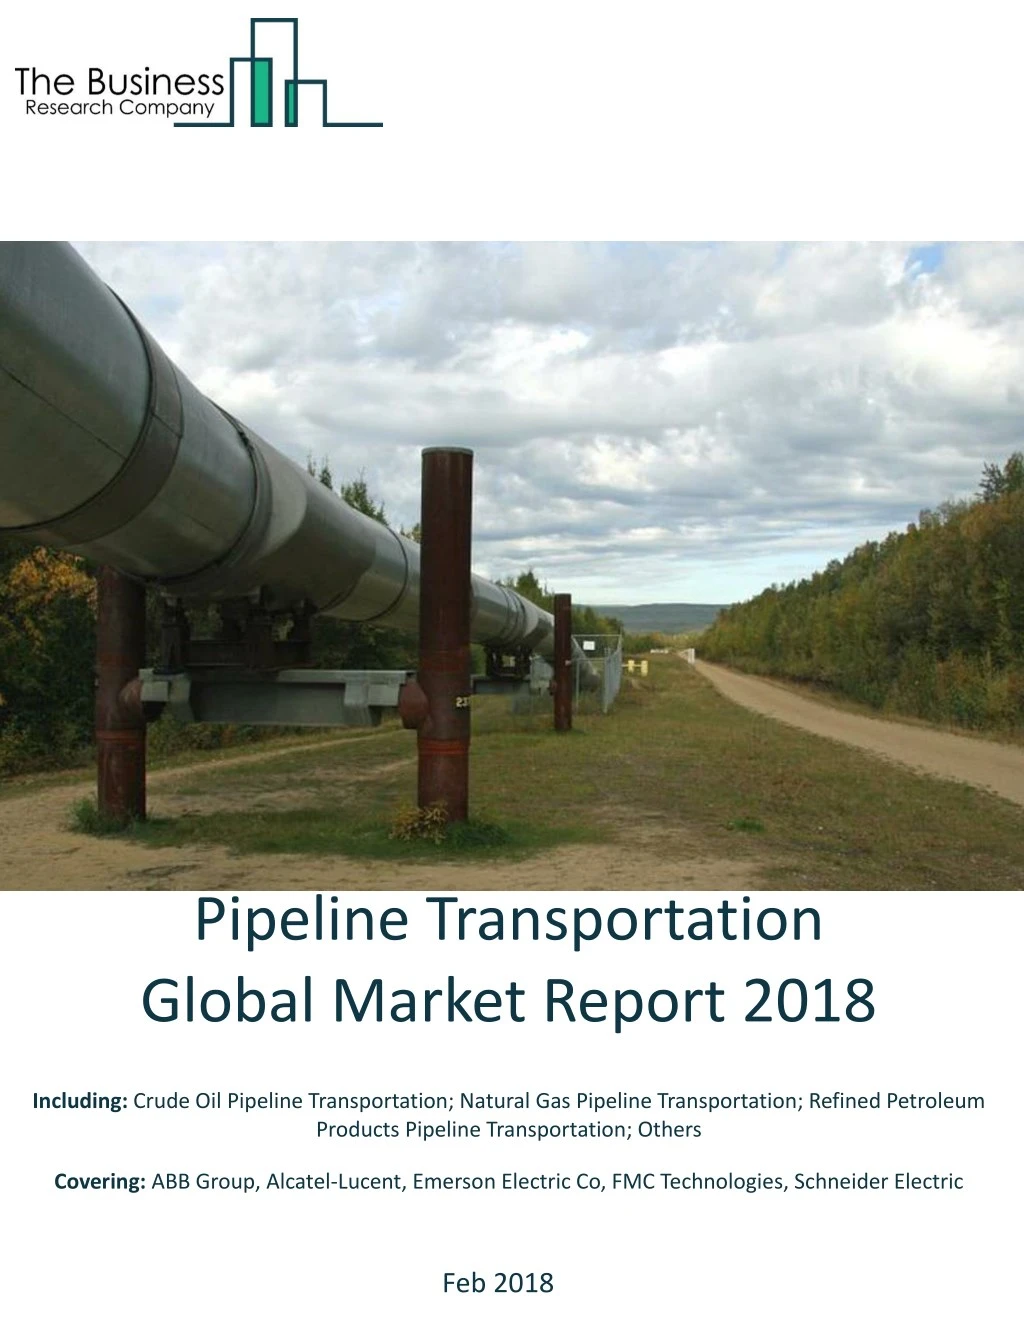 pipeline transportation global market report 2018